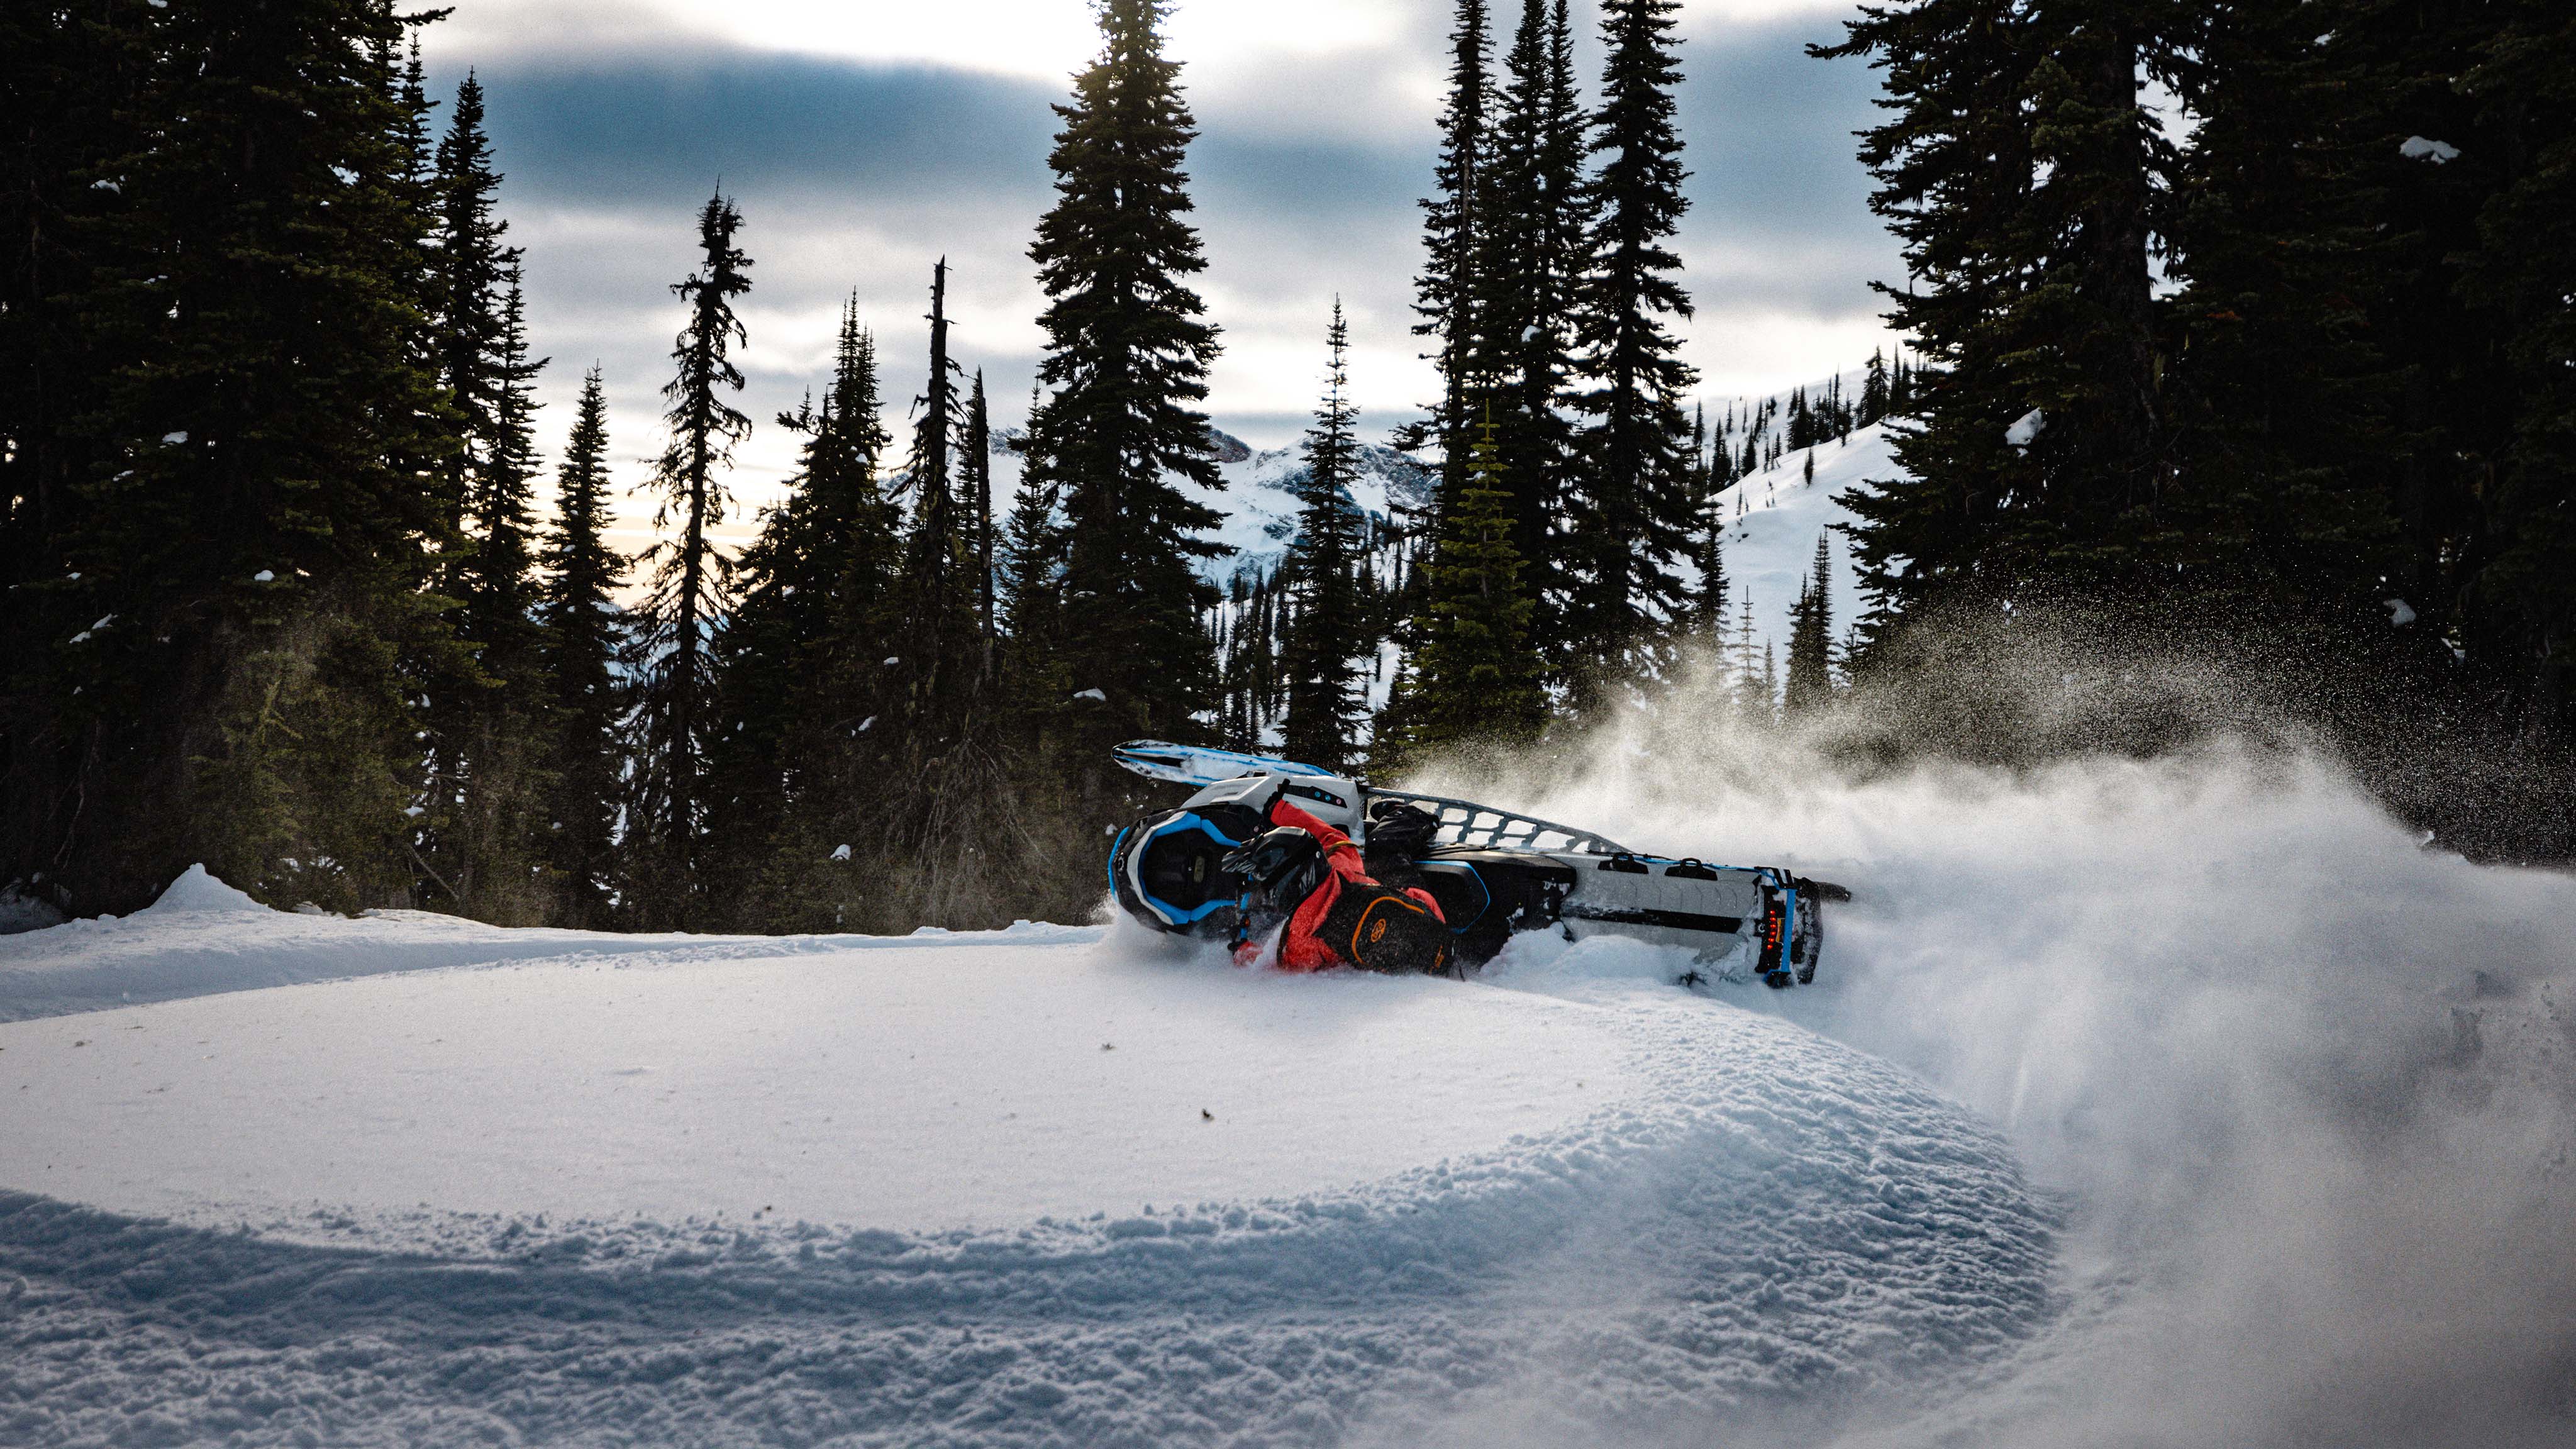 Ski-Doo Motorne Sanjke taking a turn in deep powder